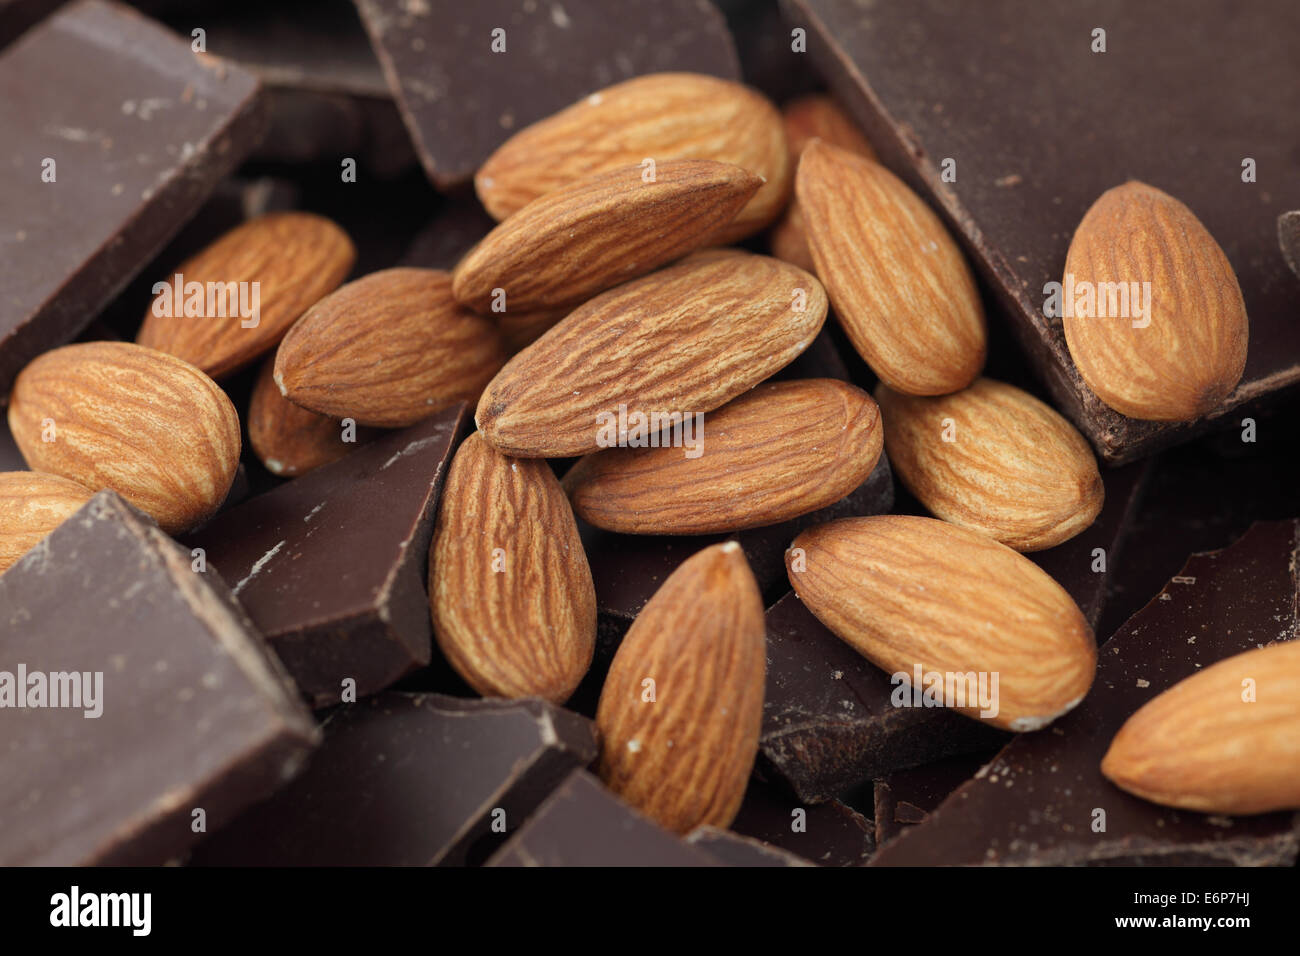 Almonds on chocolate pieces Stock Photo